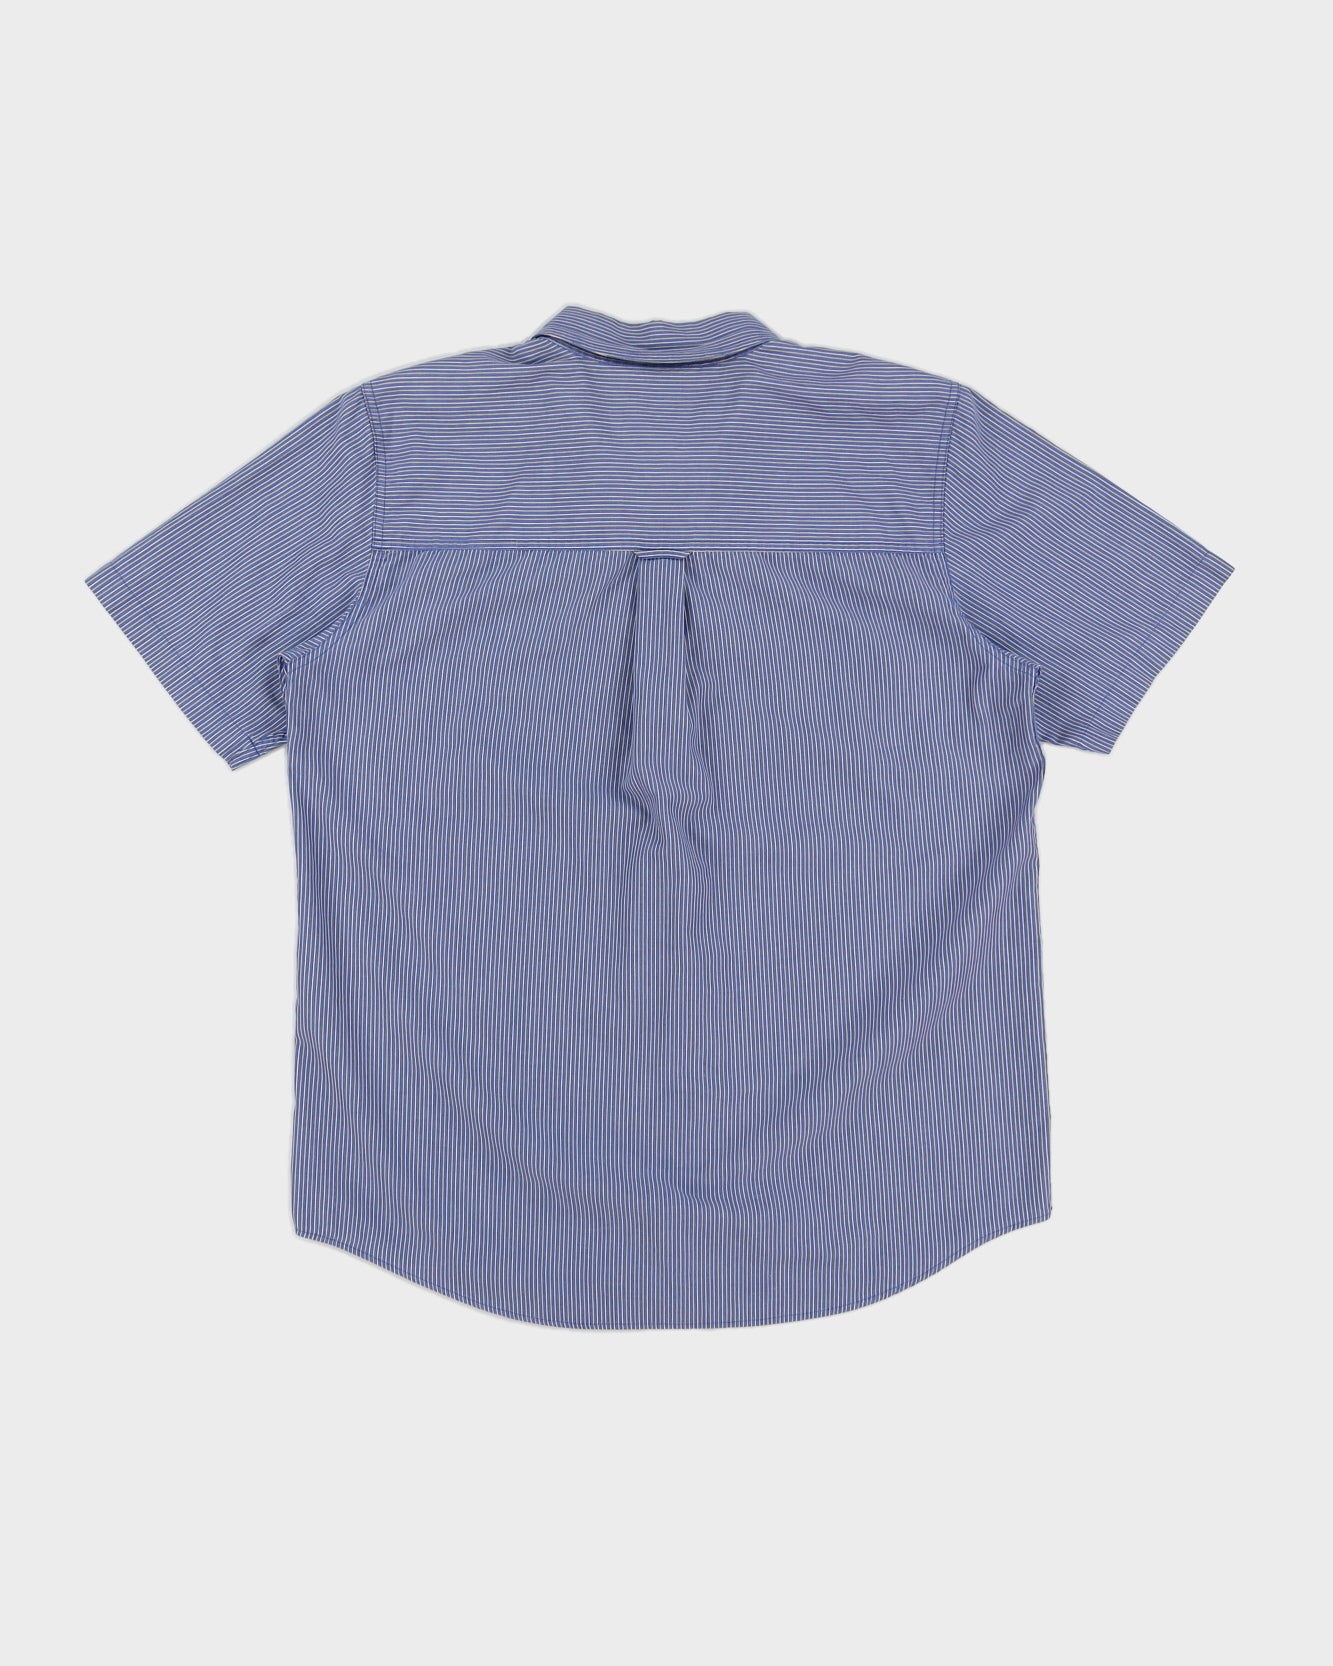 Blue Striped Chaps Shirt - L